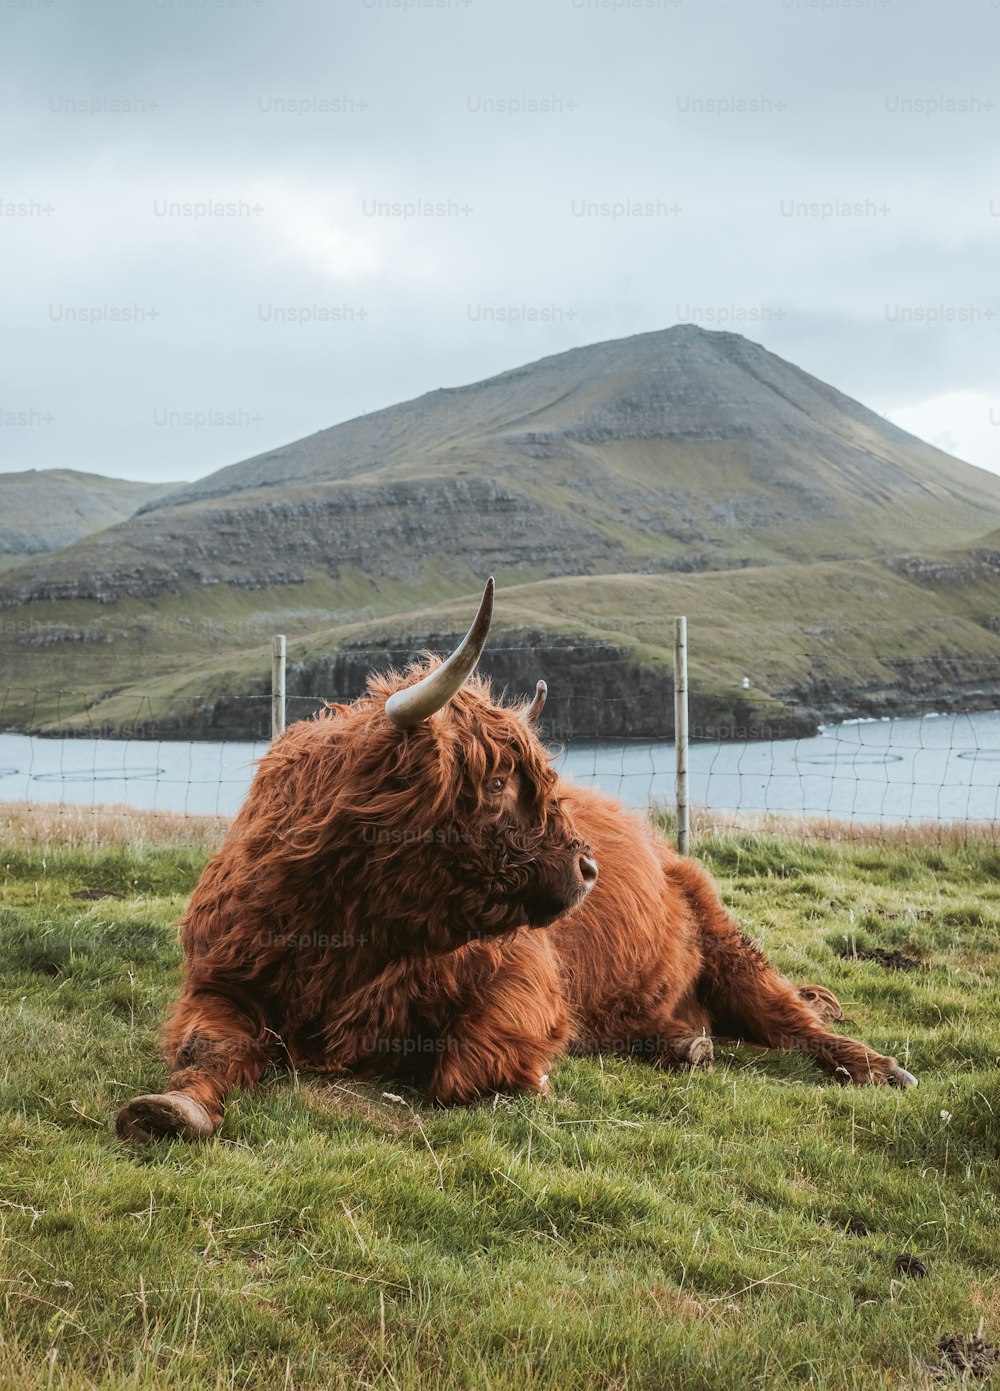 a yak lying on grass